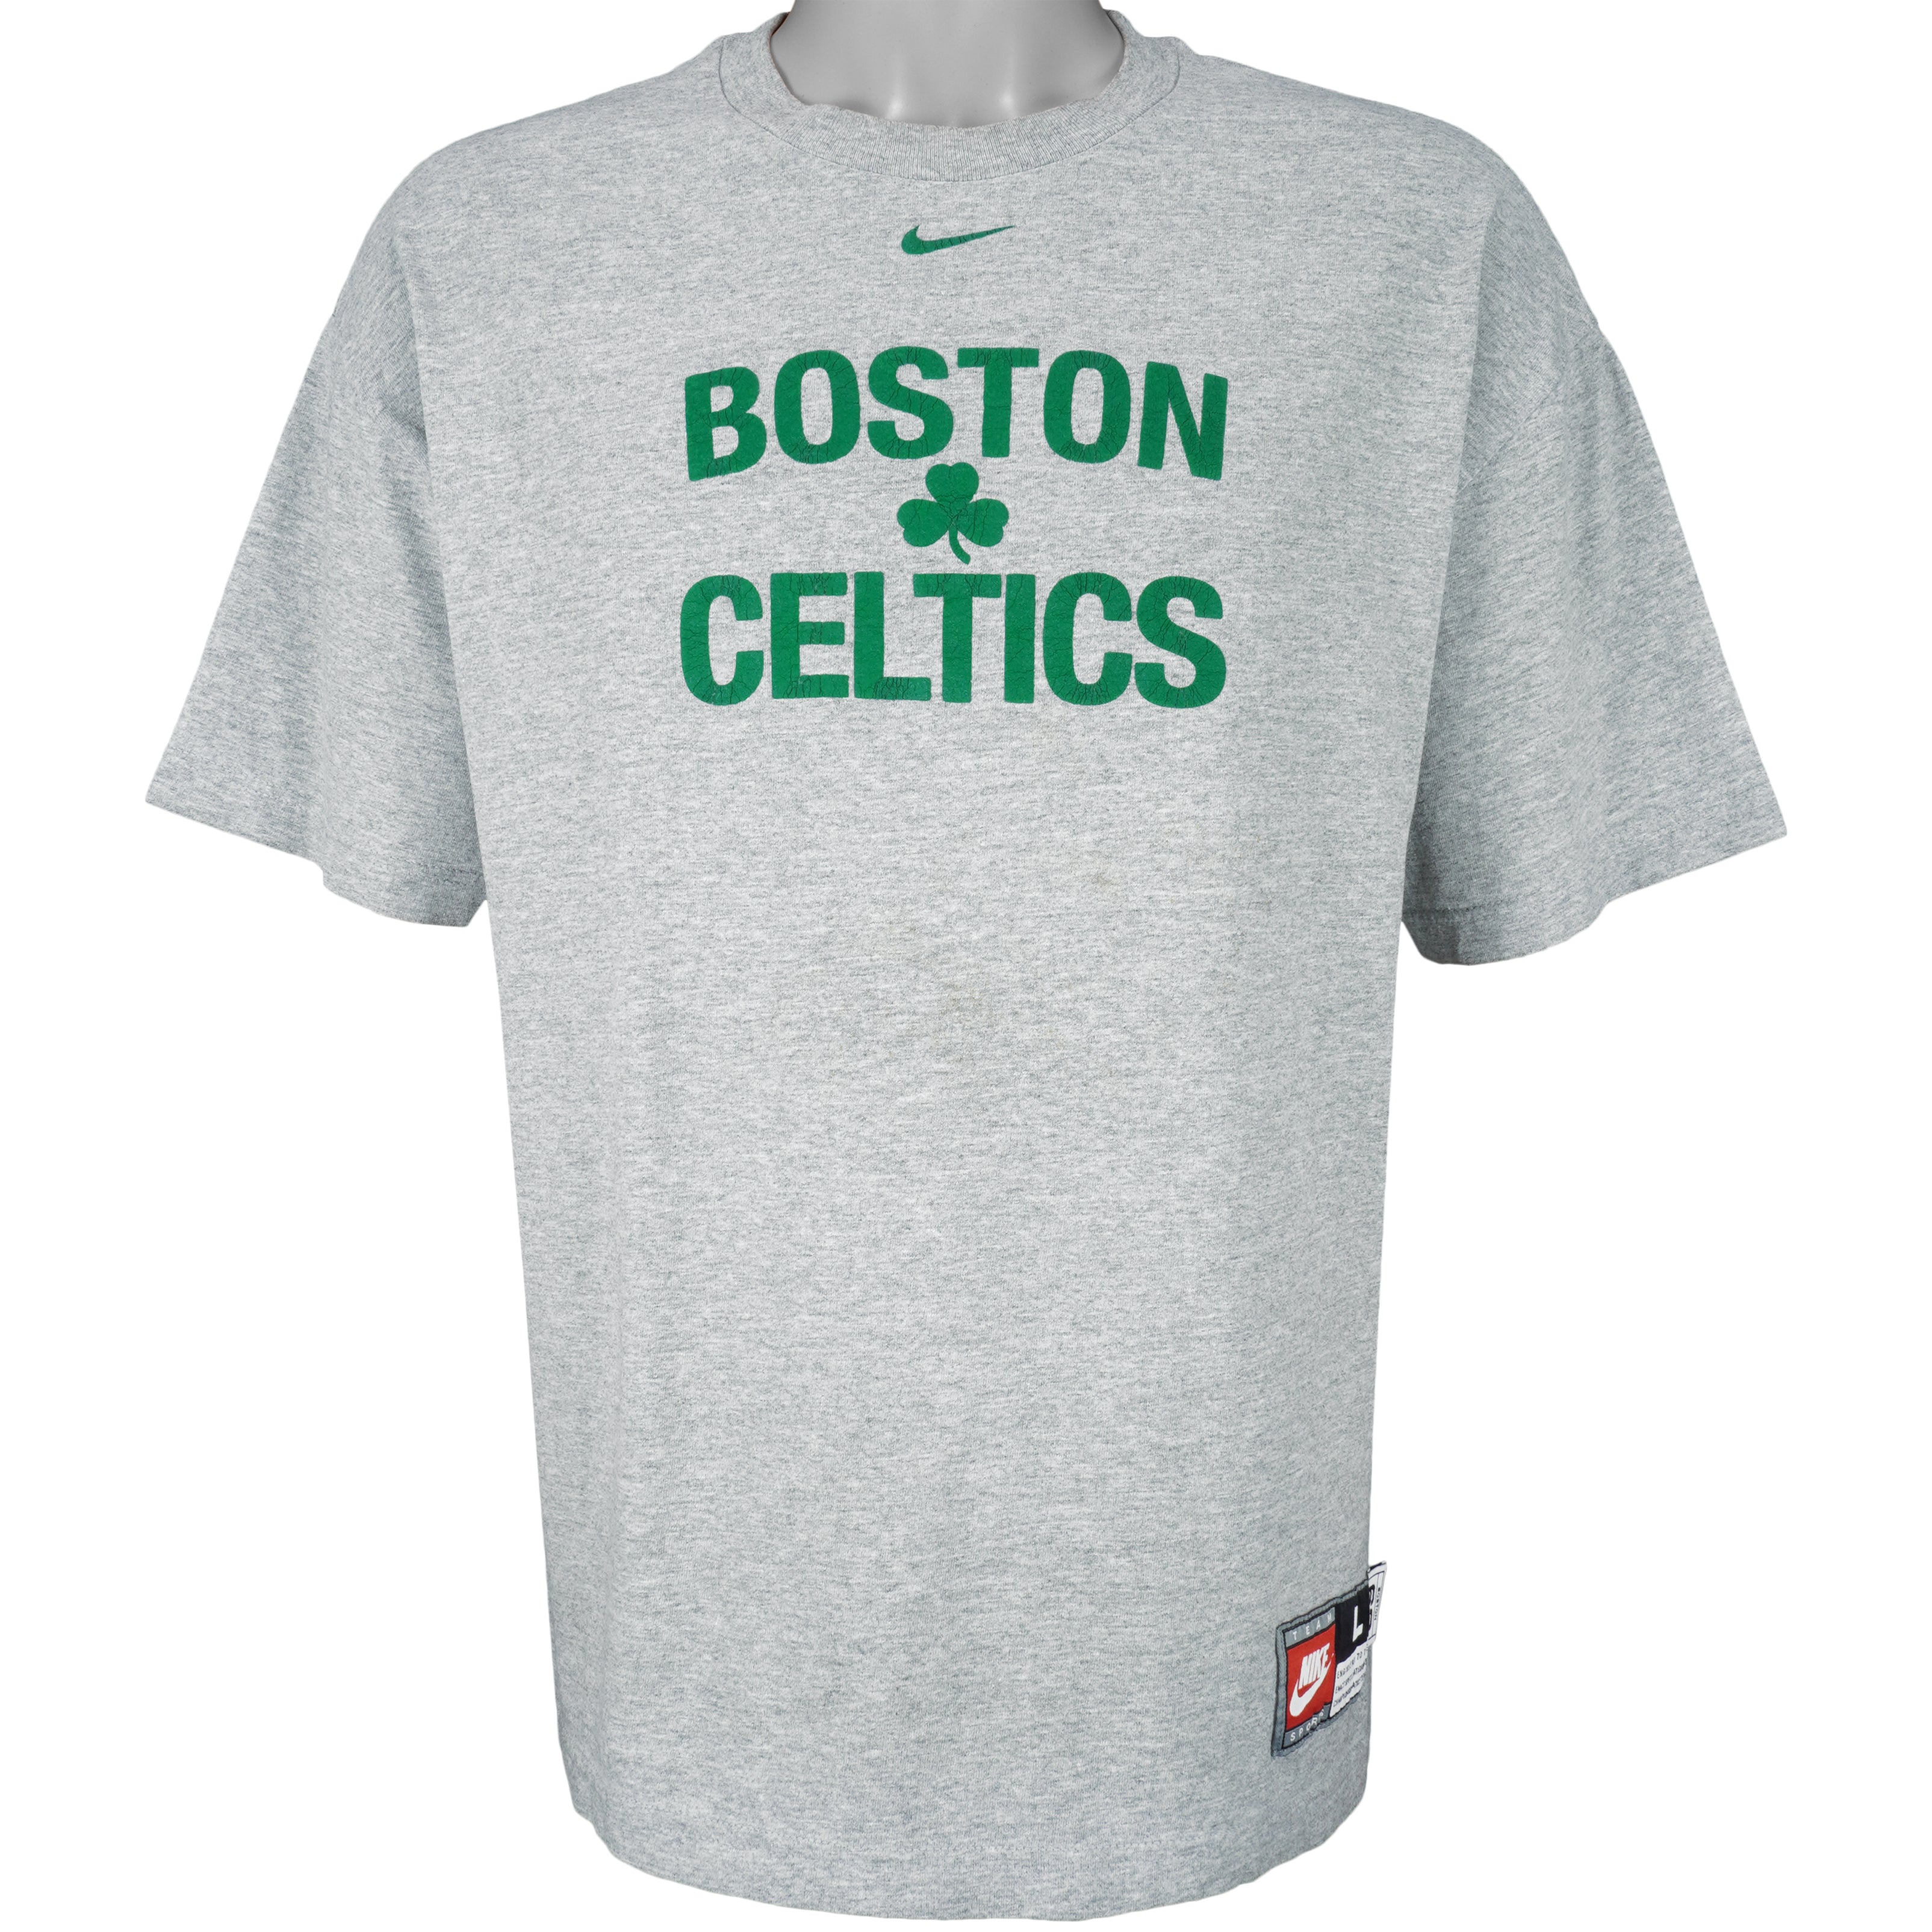 Vintage 90s Stone Nike Team X NBA Boston Celtics Basketball T